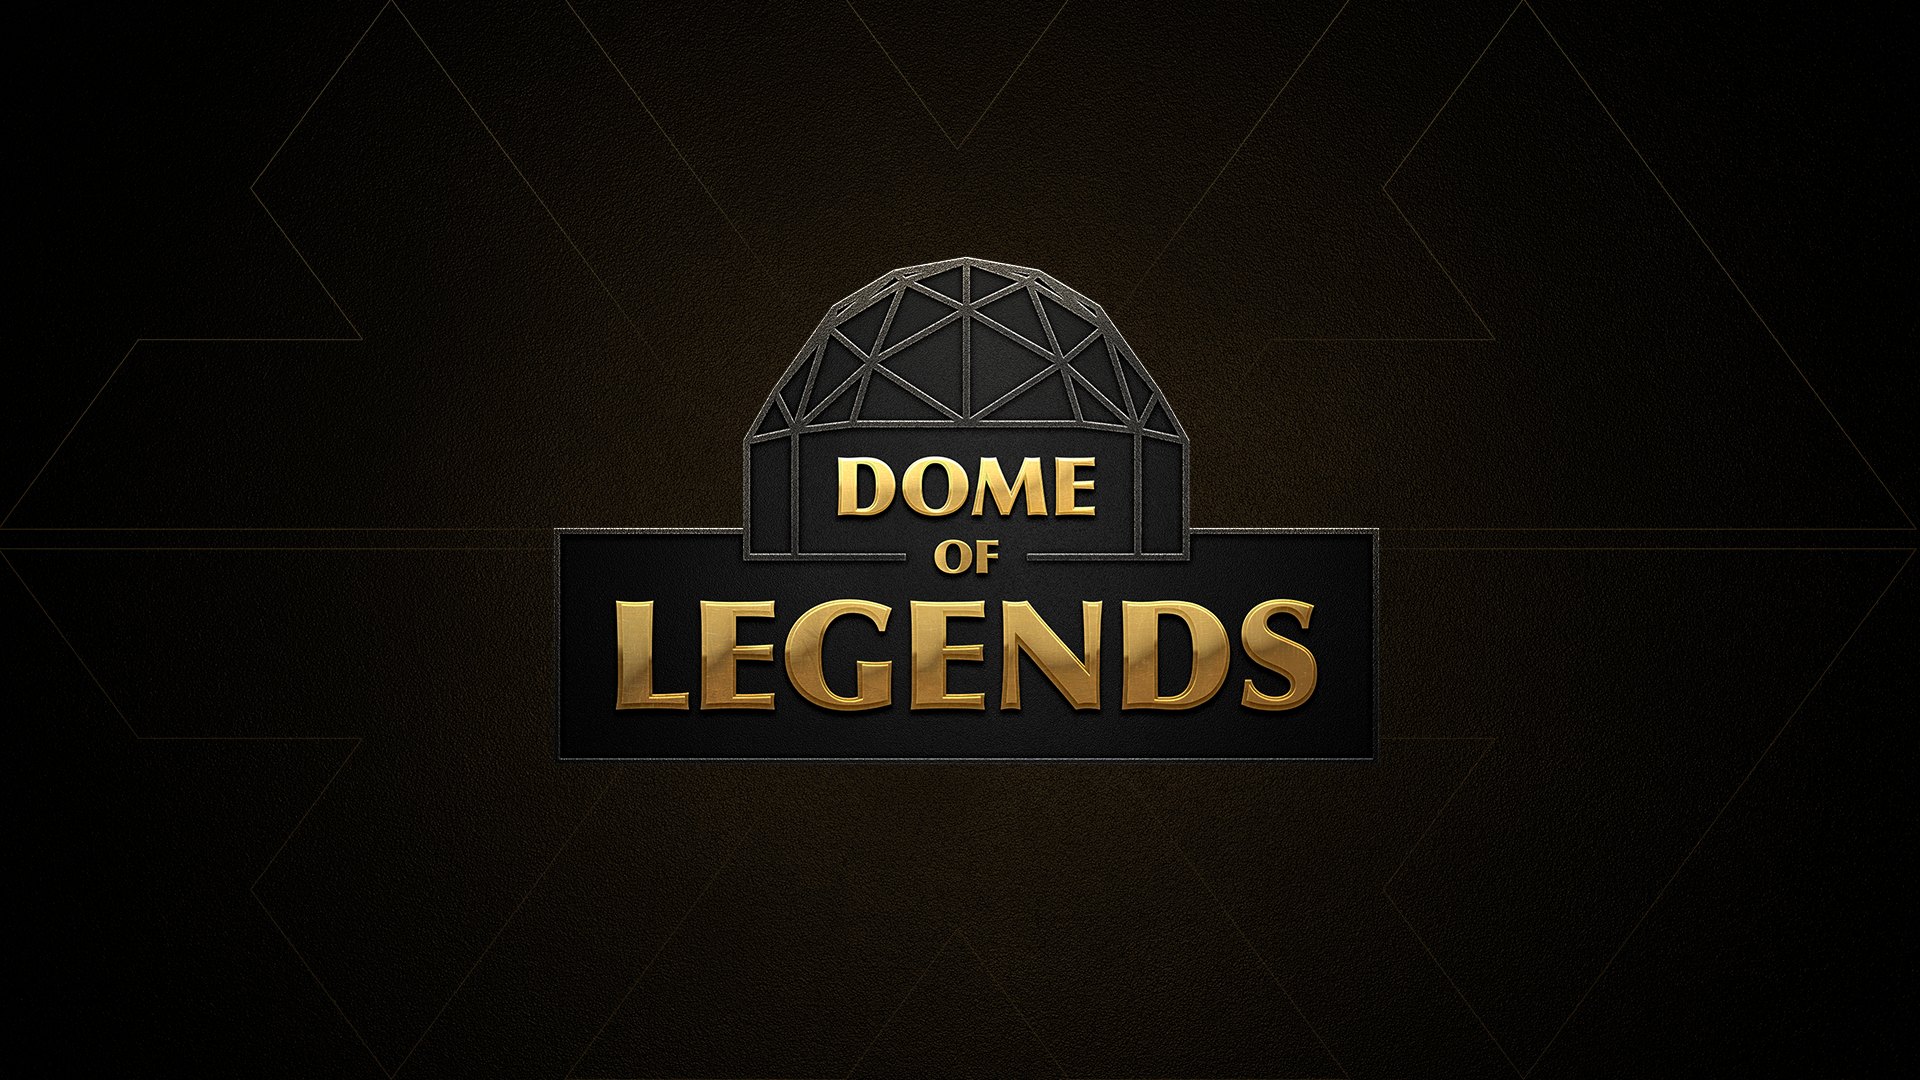 Dome of legends logo